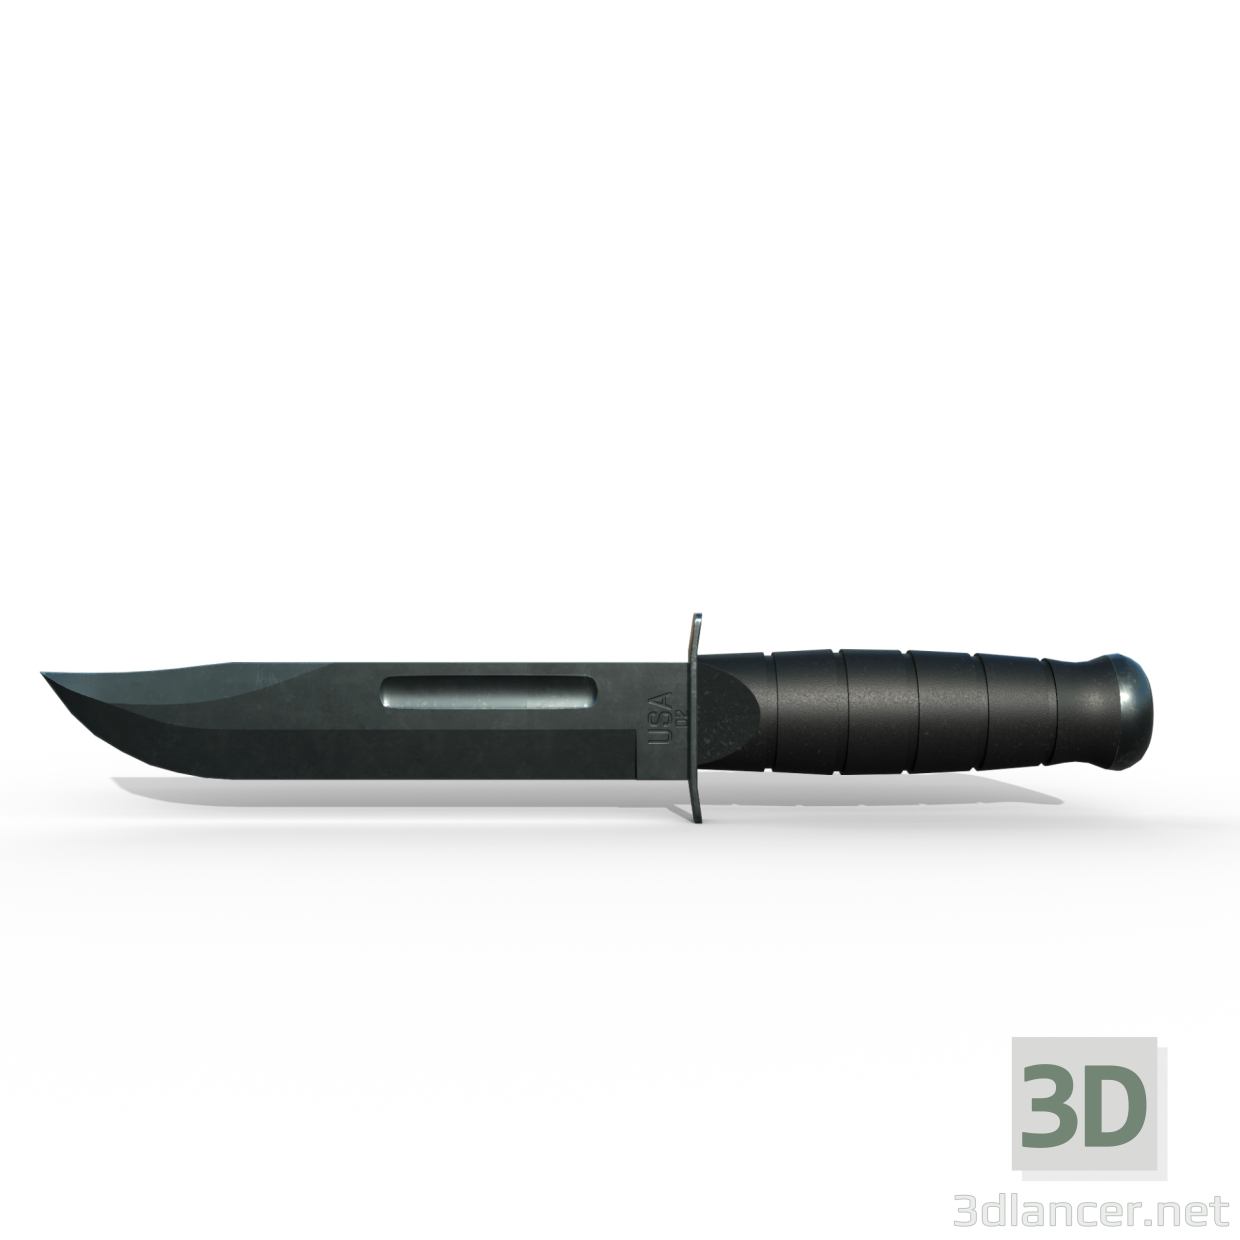 USA-Armeemesser 3D-Modell kaufen - Rendern